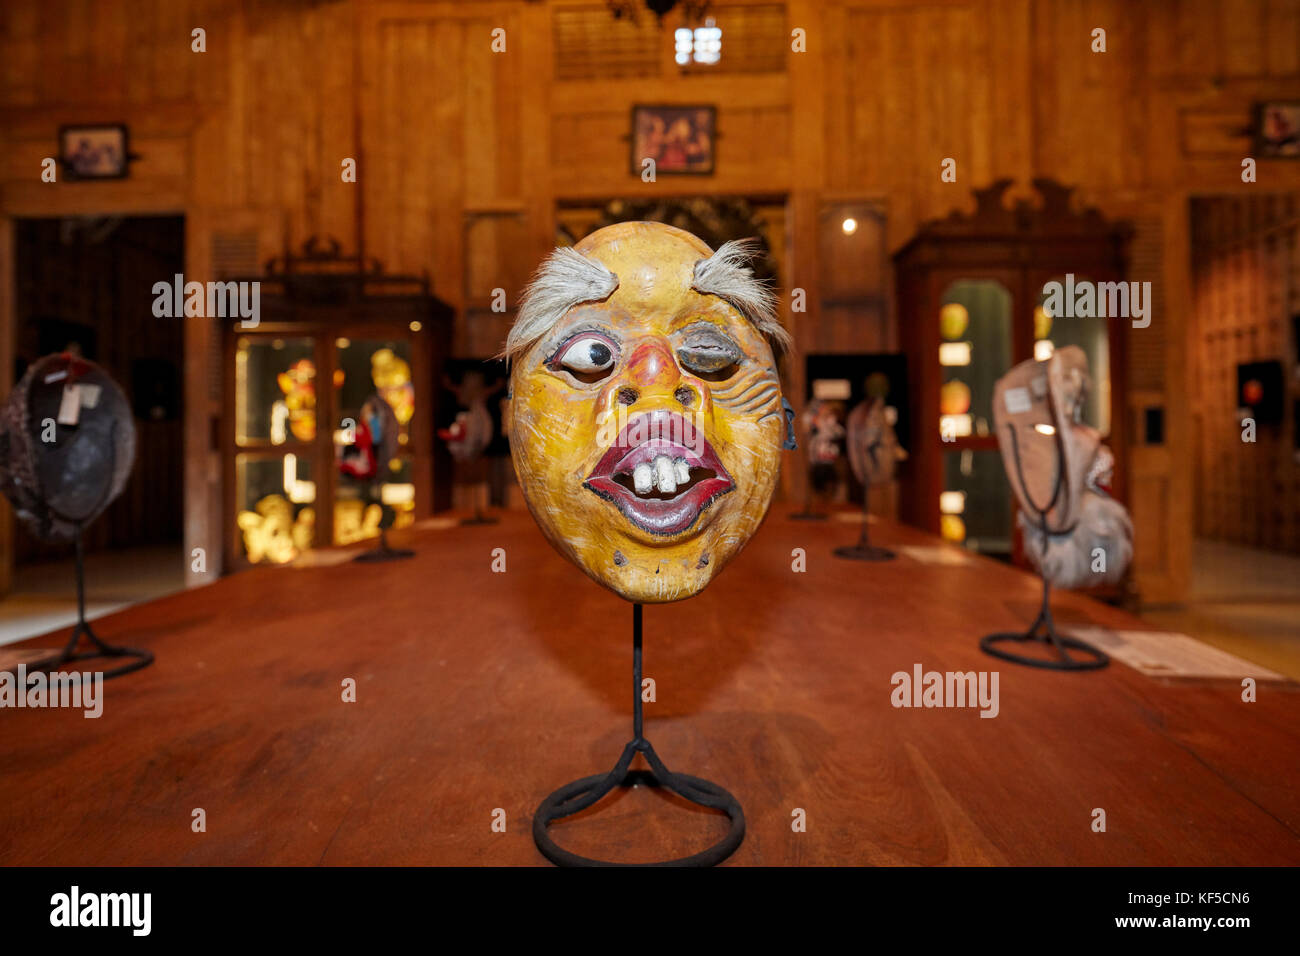 Jiweng (comic character) mask displayed in the Setia Darma House of Masks and Puppets. Mas, Ubud, Bali, Indonesia. Stock Photo